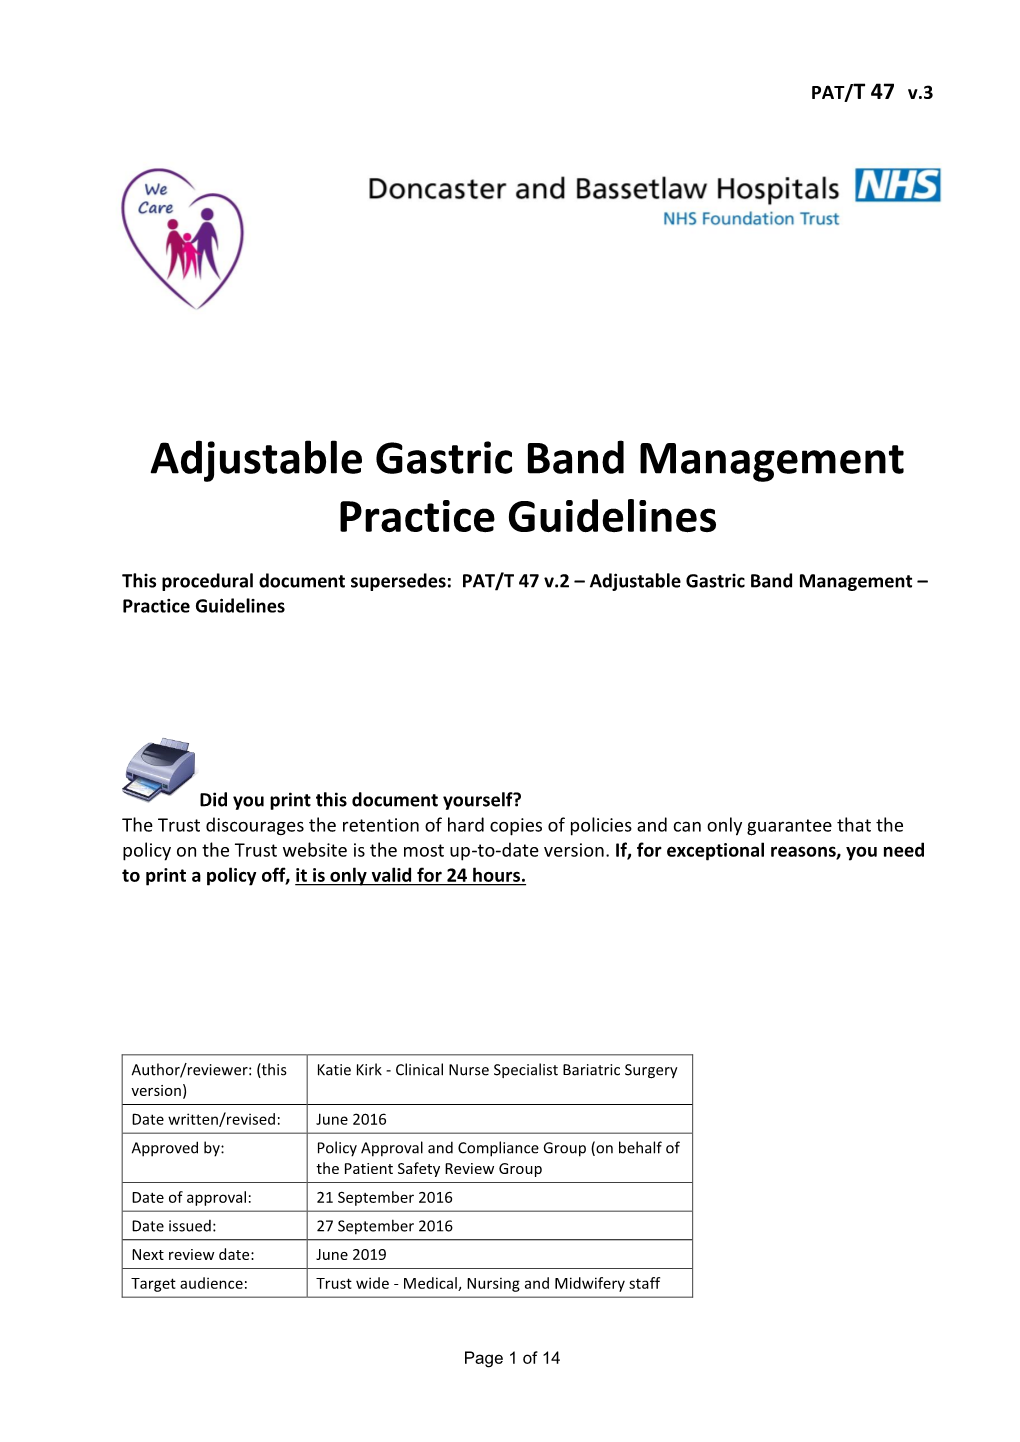 Adjustable Gastric Band Management Practice Guidelines